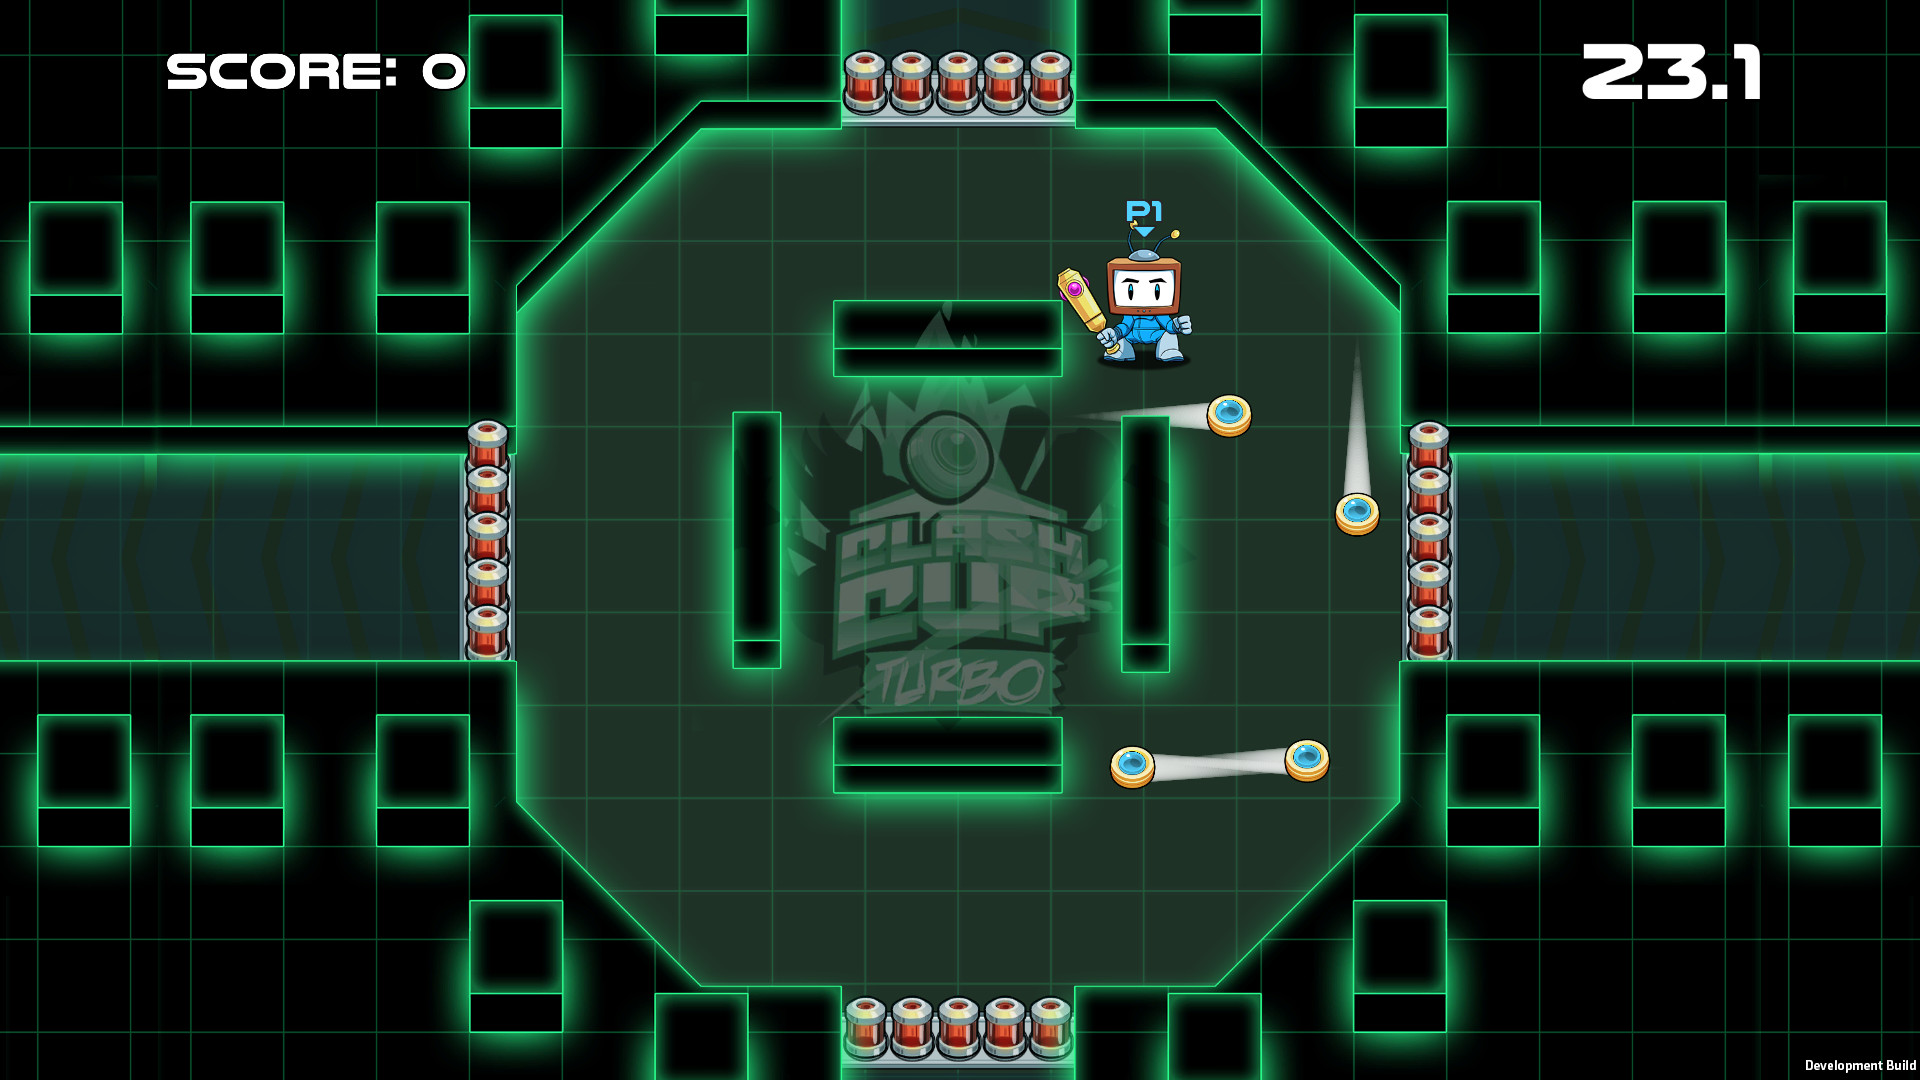 Clash Cup Turbo screenshot